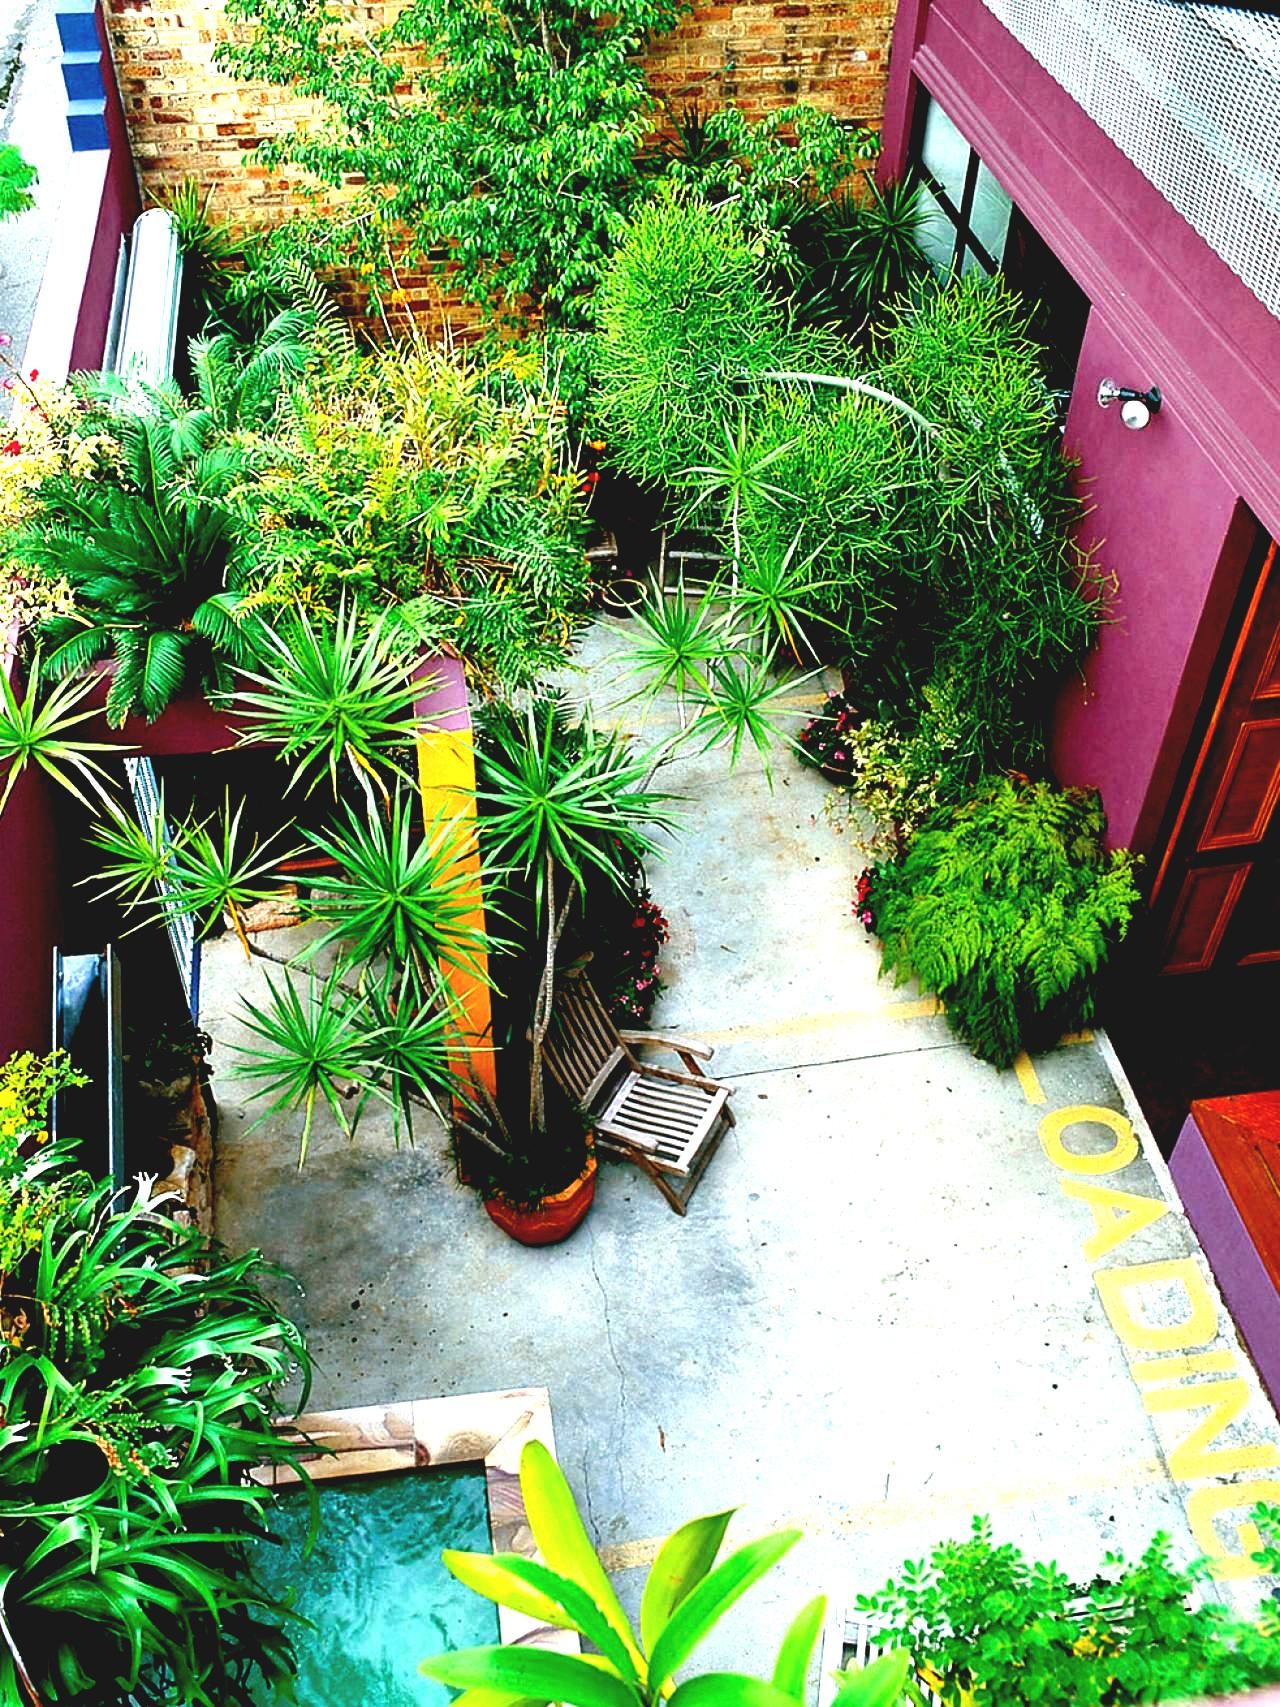 Gartendeko Zum Bepflanzen Best Of Best Narrow Garden Ideas Pinterest Side Small Gardens and